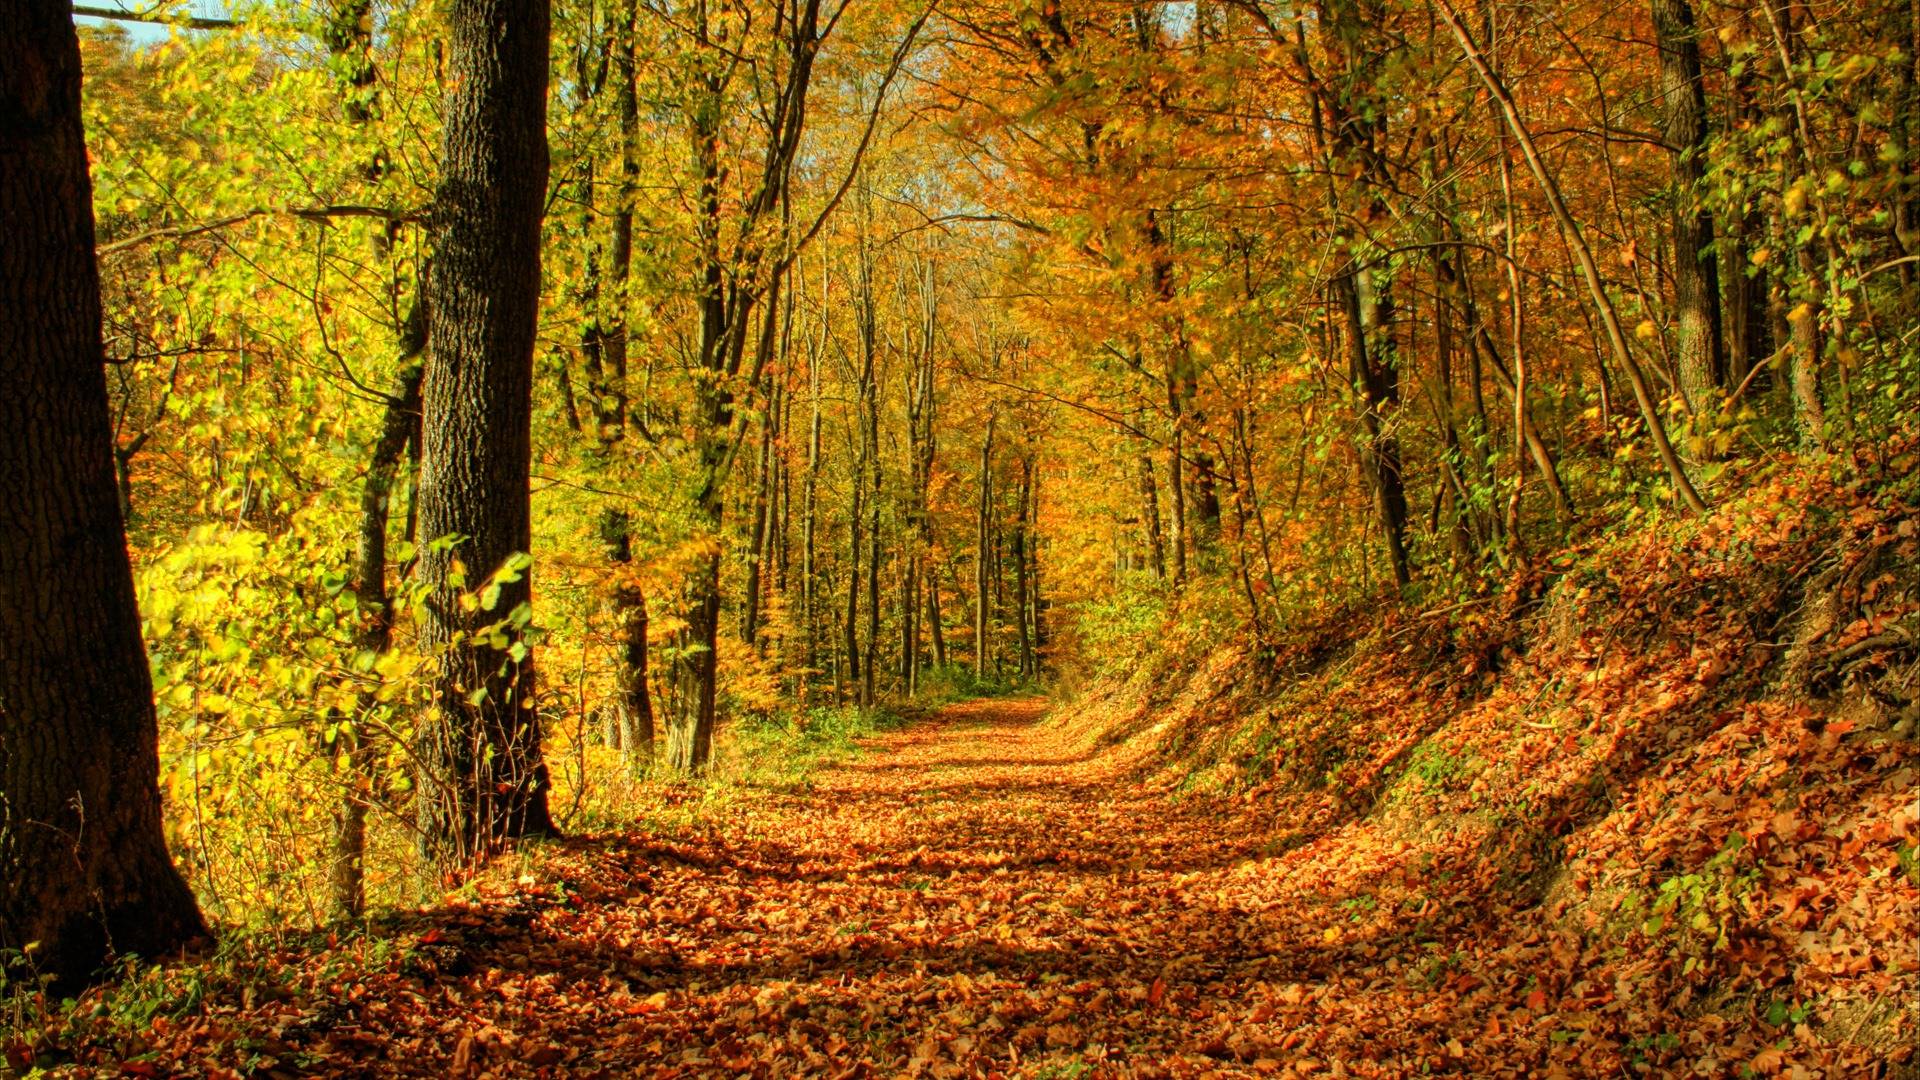 Fall of Autumn Leaves Desktop Wallpaper. Download High Resolution